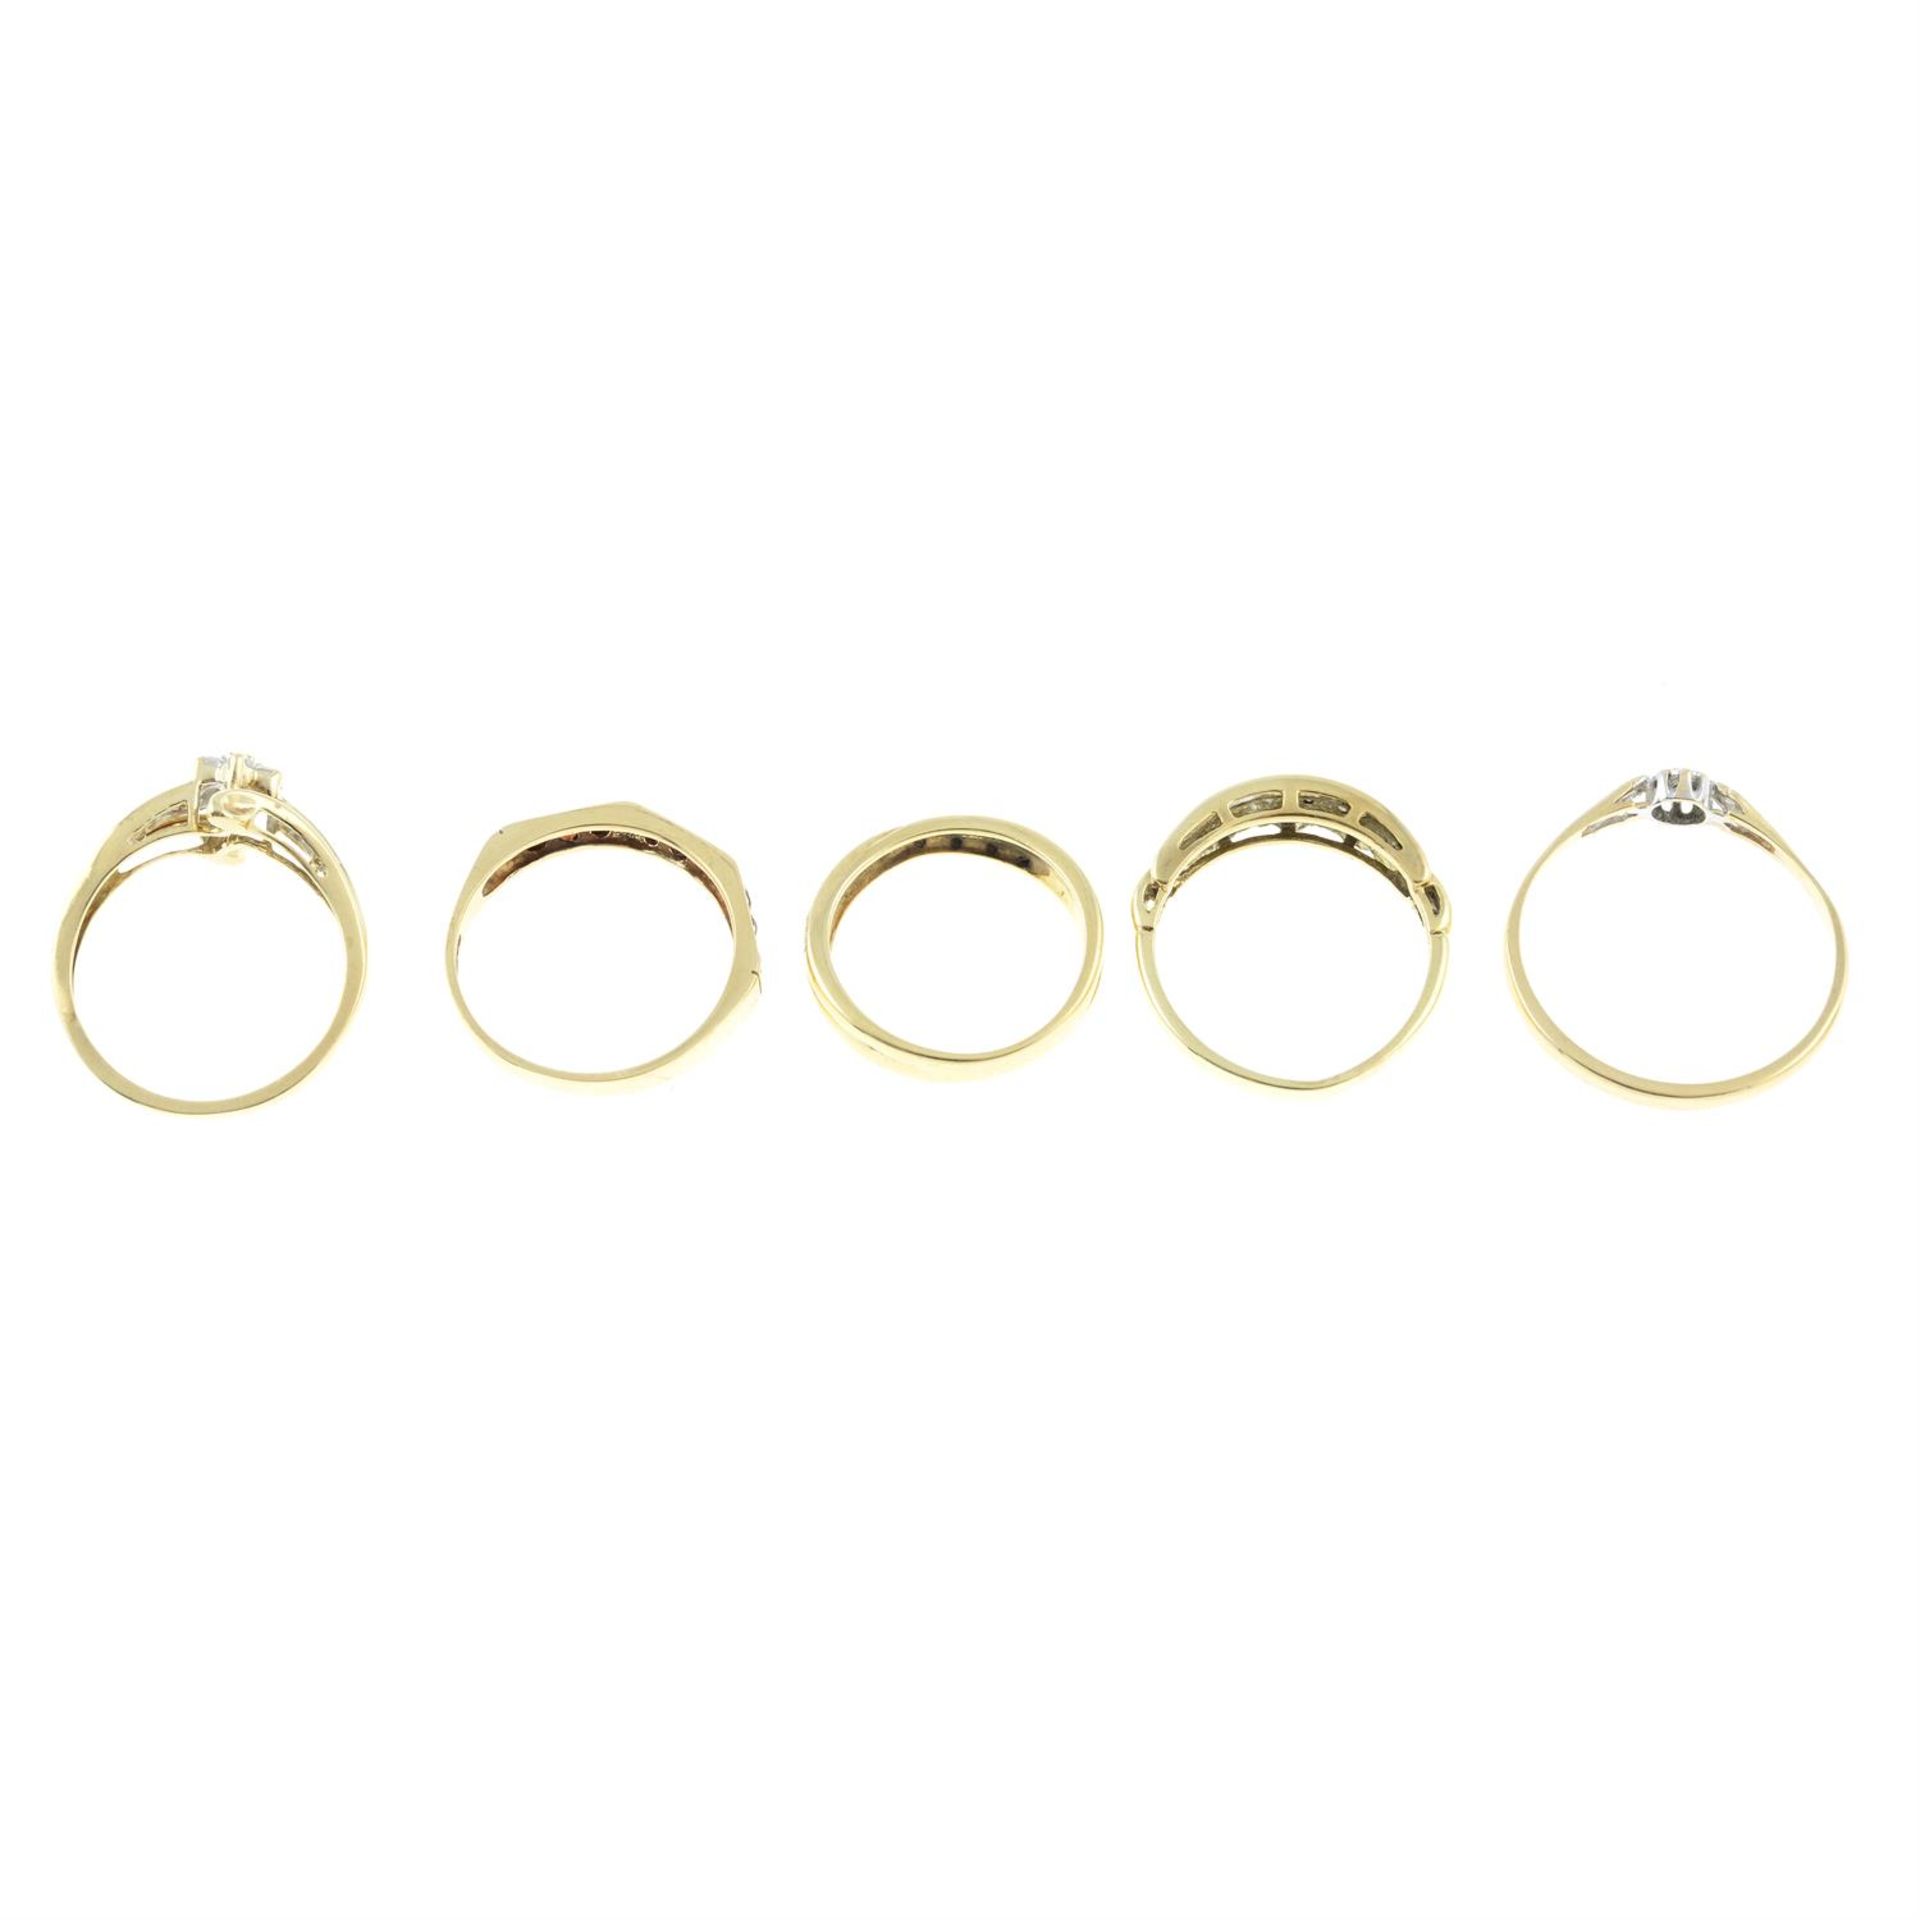 Five 9ct gold gem-set rings. - Image 2 of 2